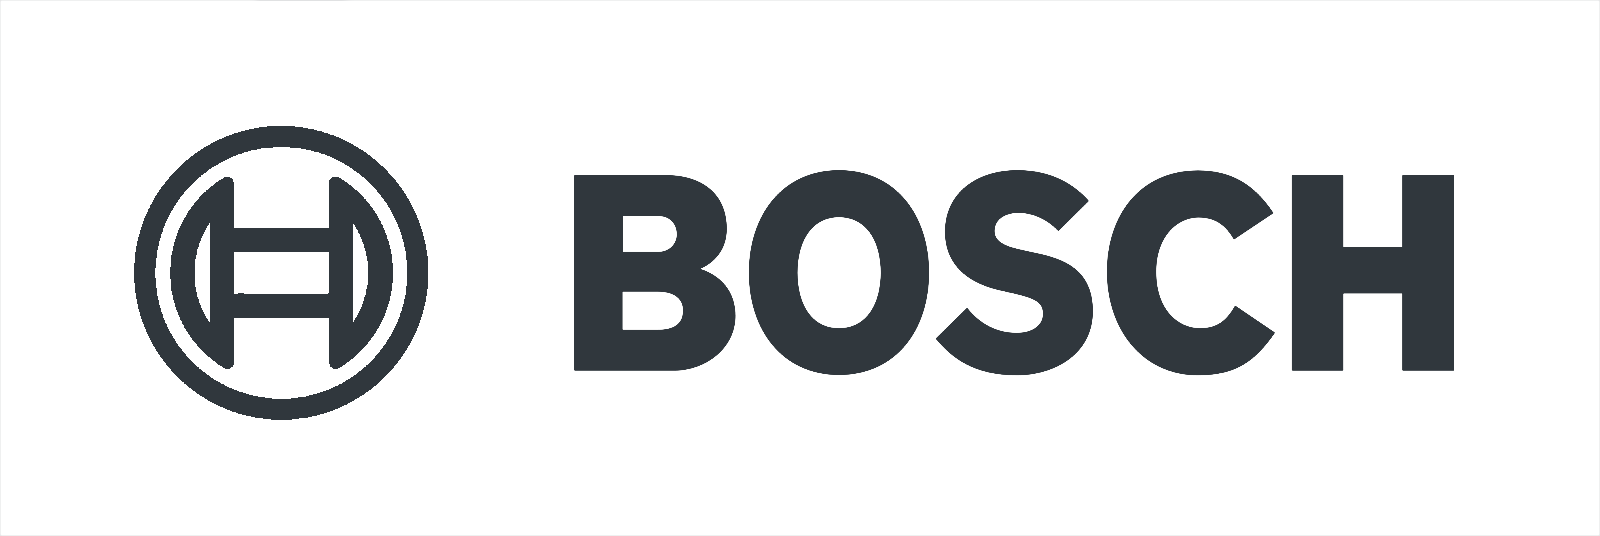 Bosch-dark